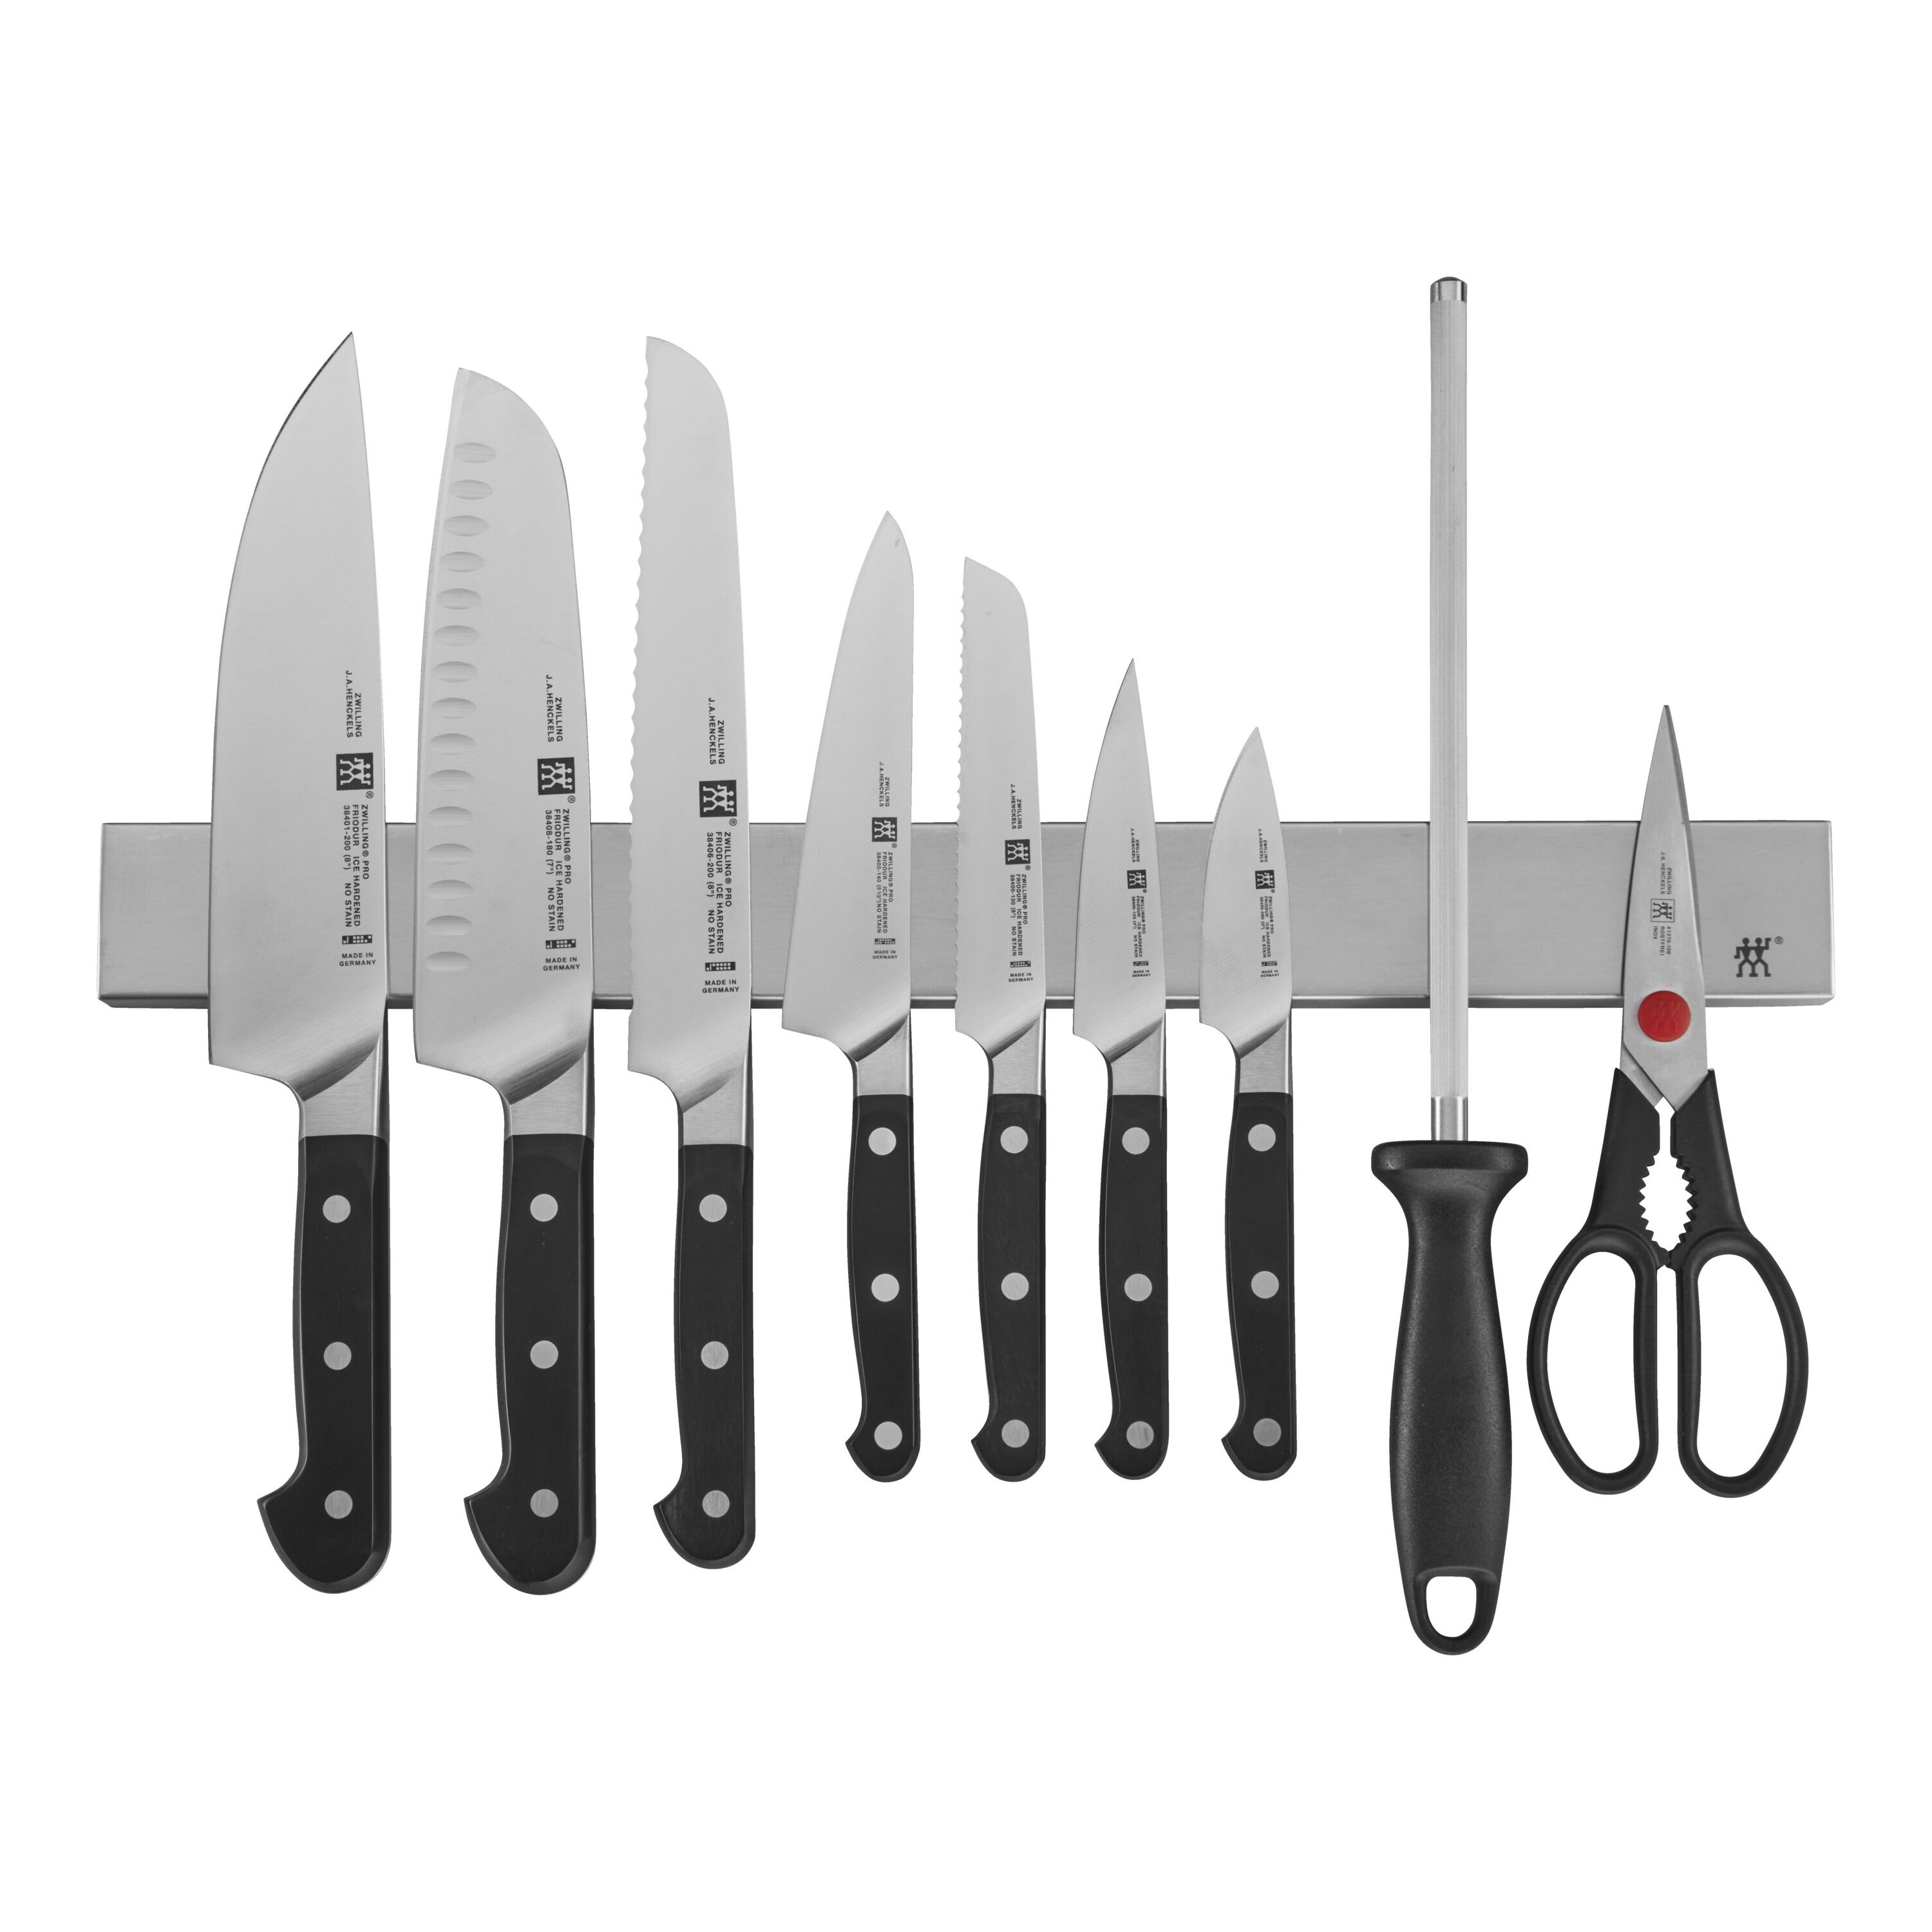 UPSCALE CALPHALON STEAK KNIVES KNIFE SET OF 8 TABLEWARE SERRATED STRAIGHT  EDGE